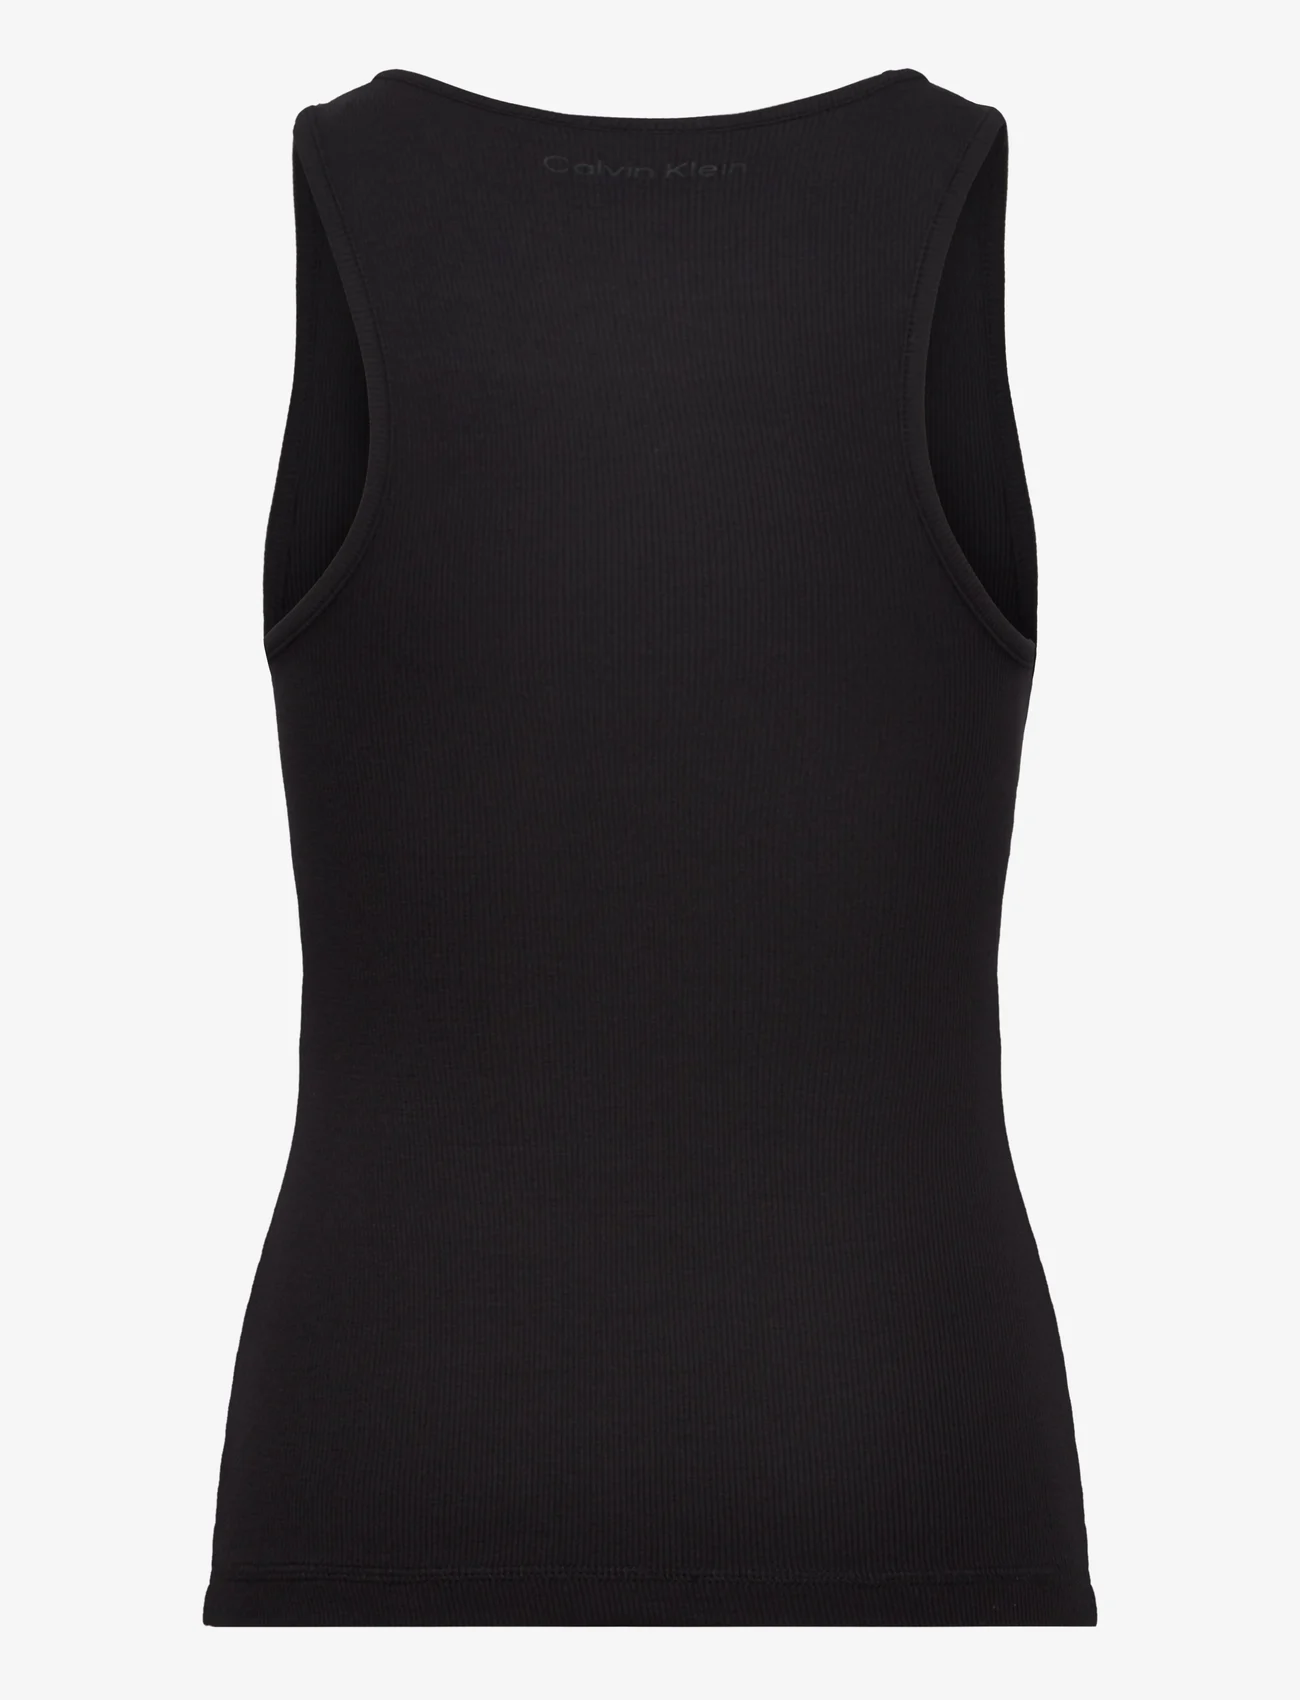 Calvin Klein - MODAL RIB TANK - sleeveless tops - ck black - 1